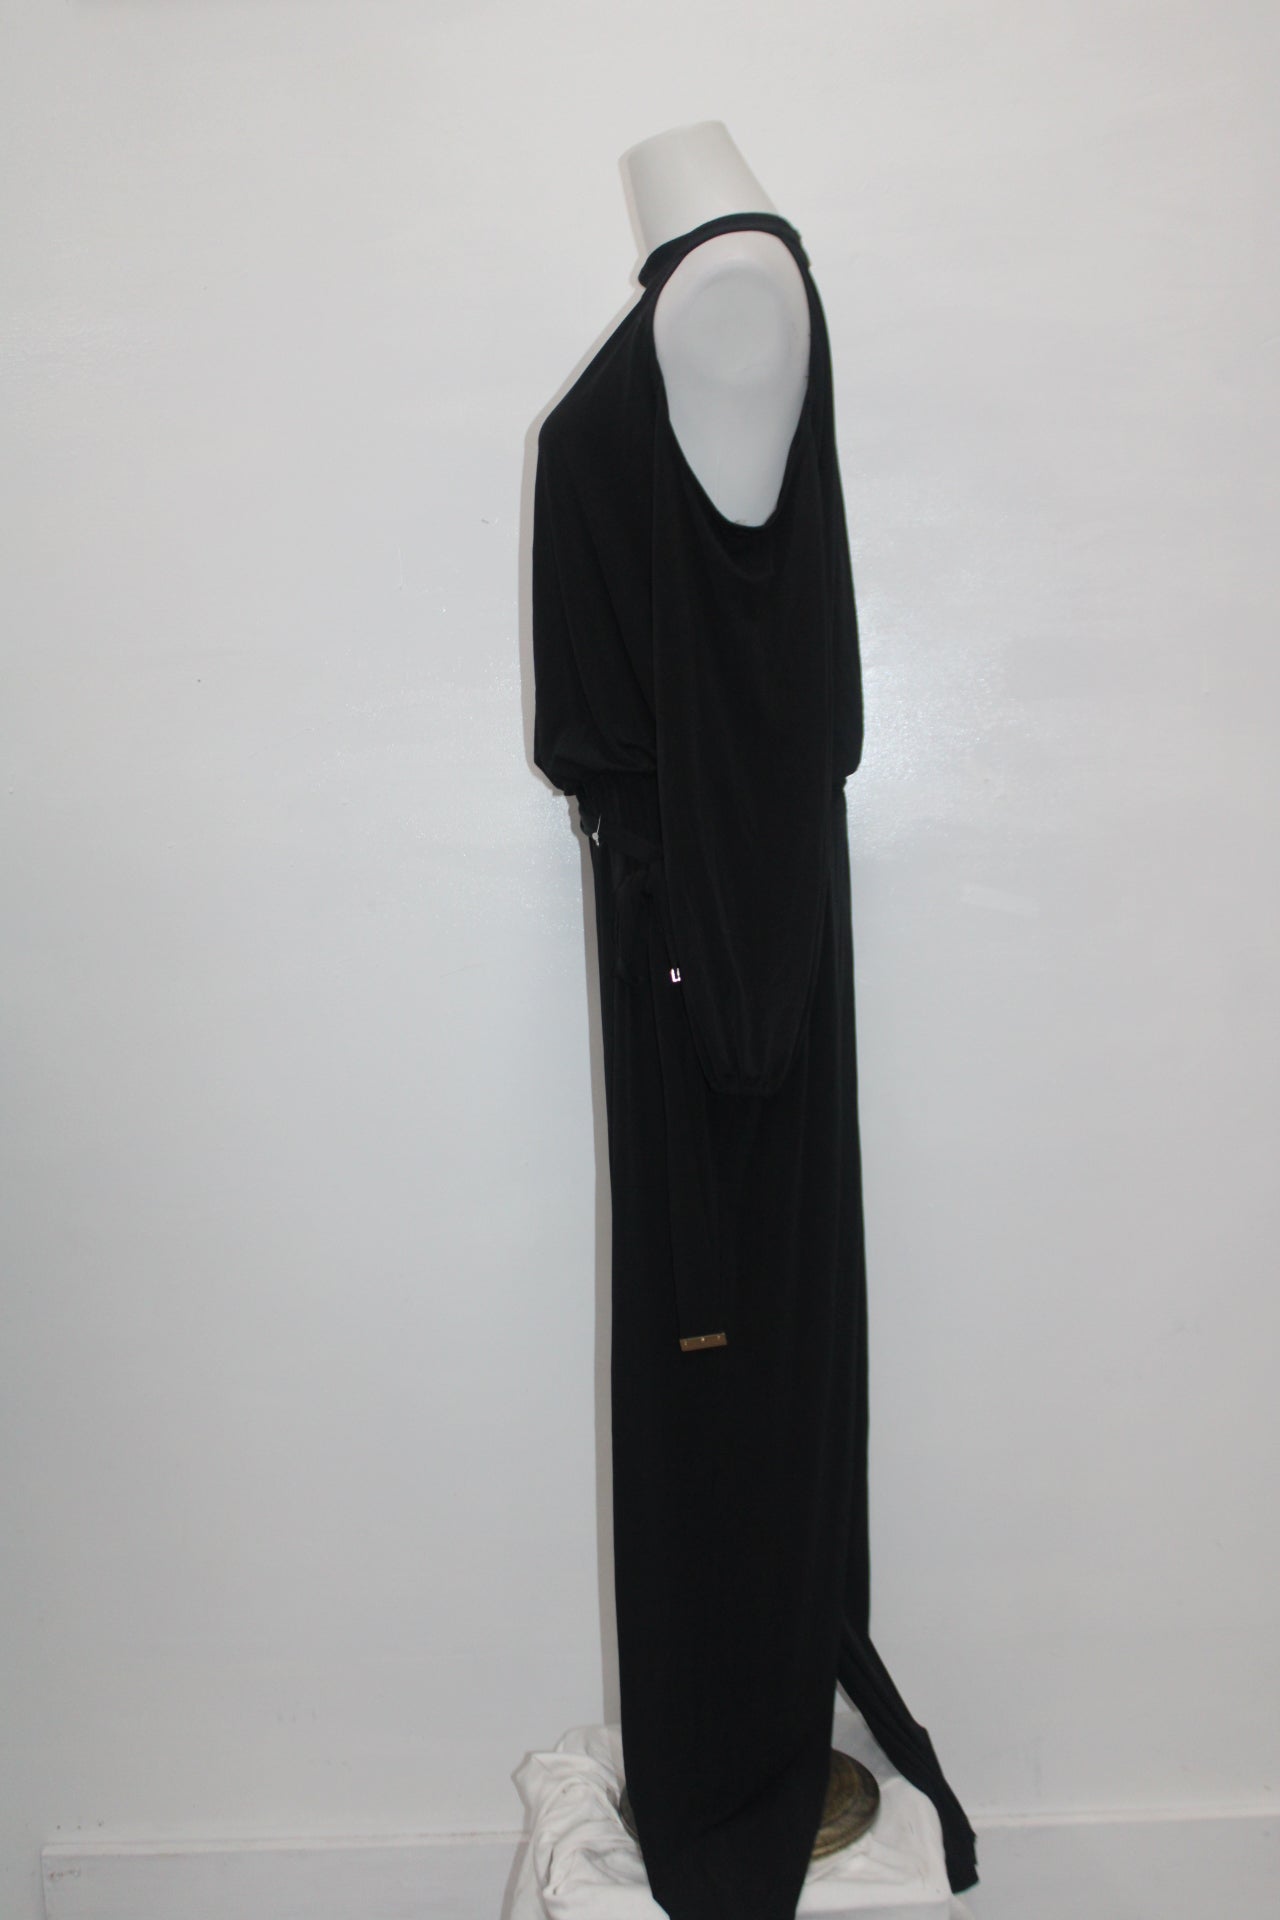 Thalia Sodi Women Keyhole Neck Jumpsuit, Black, L - New Without Tag 3622